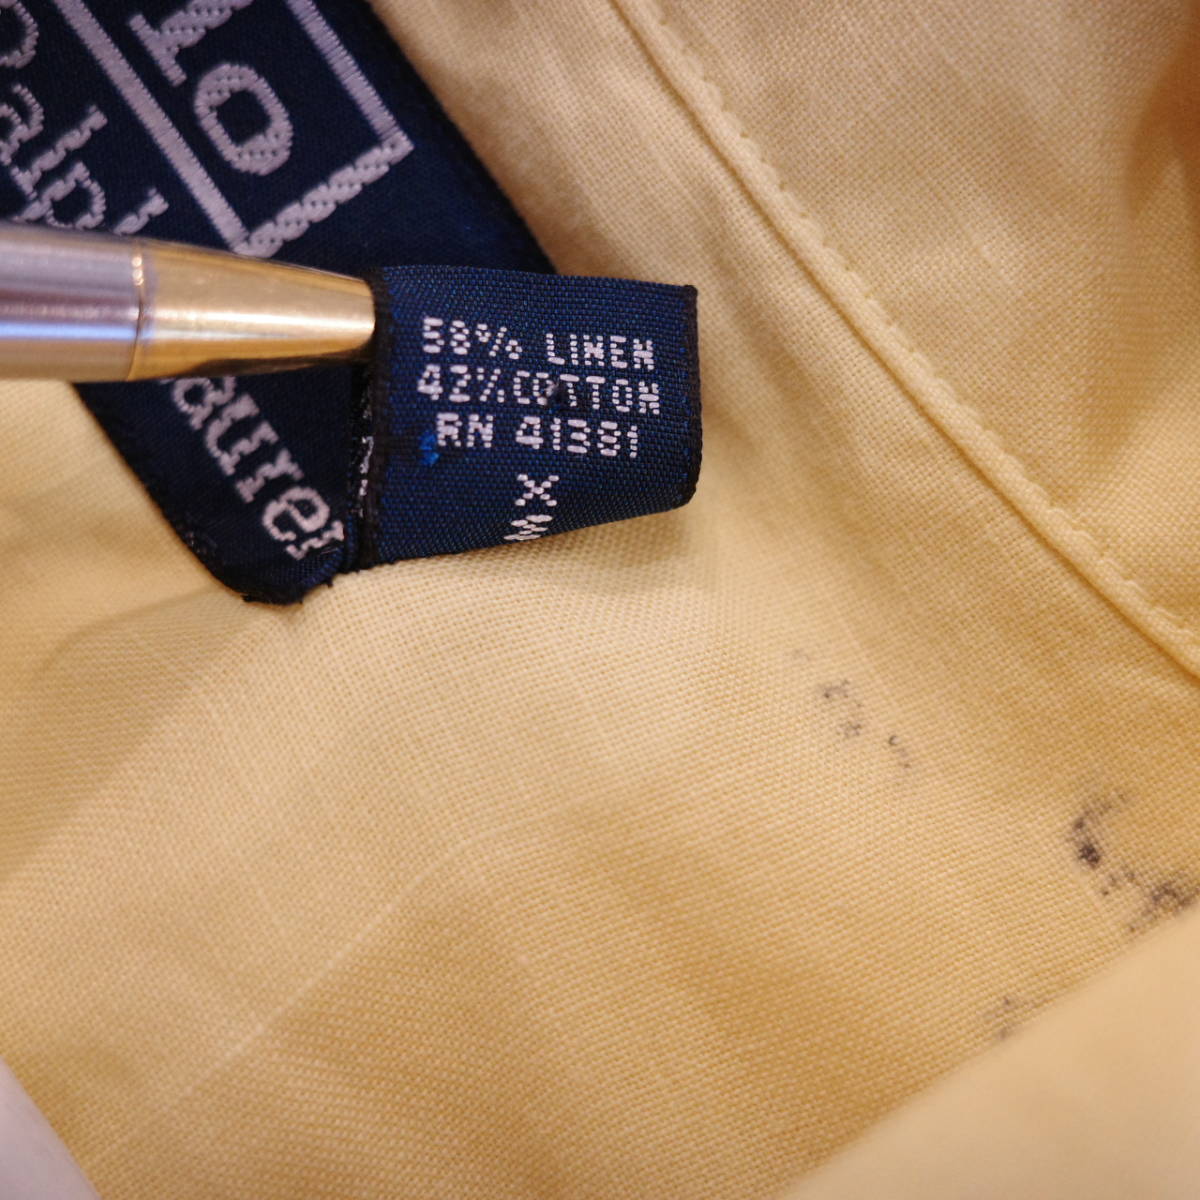  Ralph Lauren хлопок linen. воротник рубашка L размер Polo by Ralph Lauren linen cotton open shirt